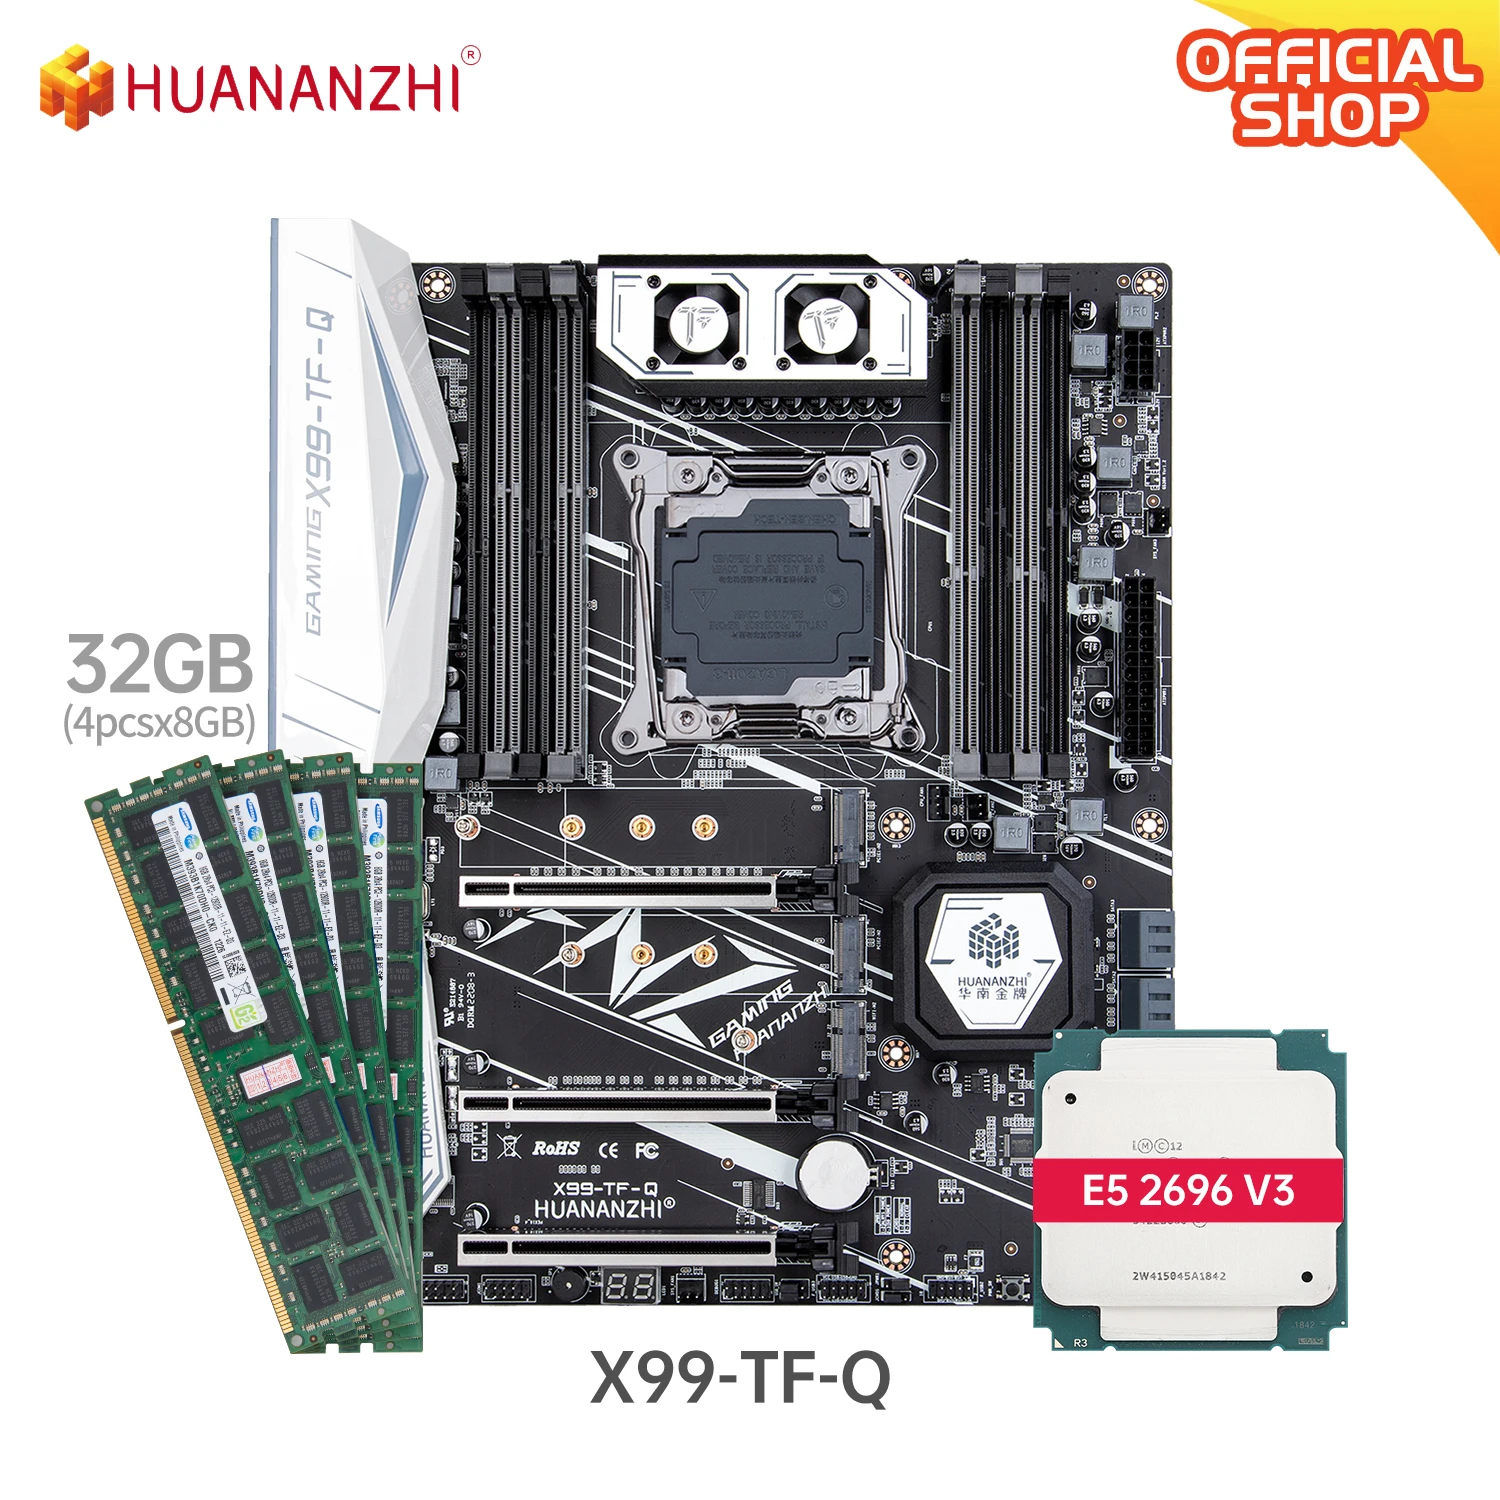 HUANANZHI-placa base X99 TF Q X99, con Intel XEON E5 2696 V3, con 4x8G DDR3 RECC, conjunto de memoria, SATA 3,0, USB 3,0